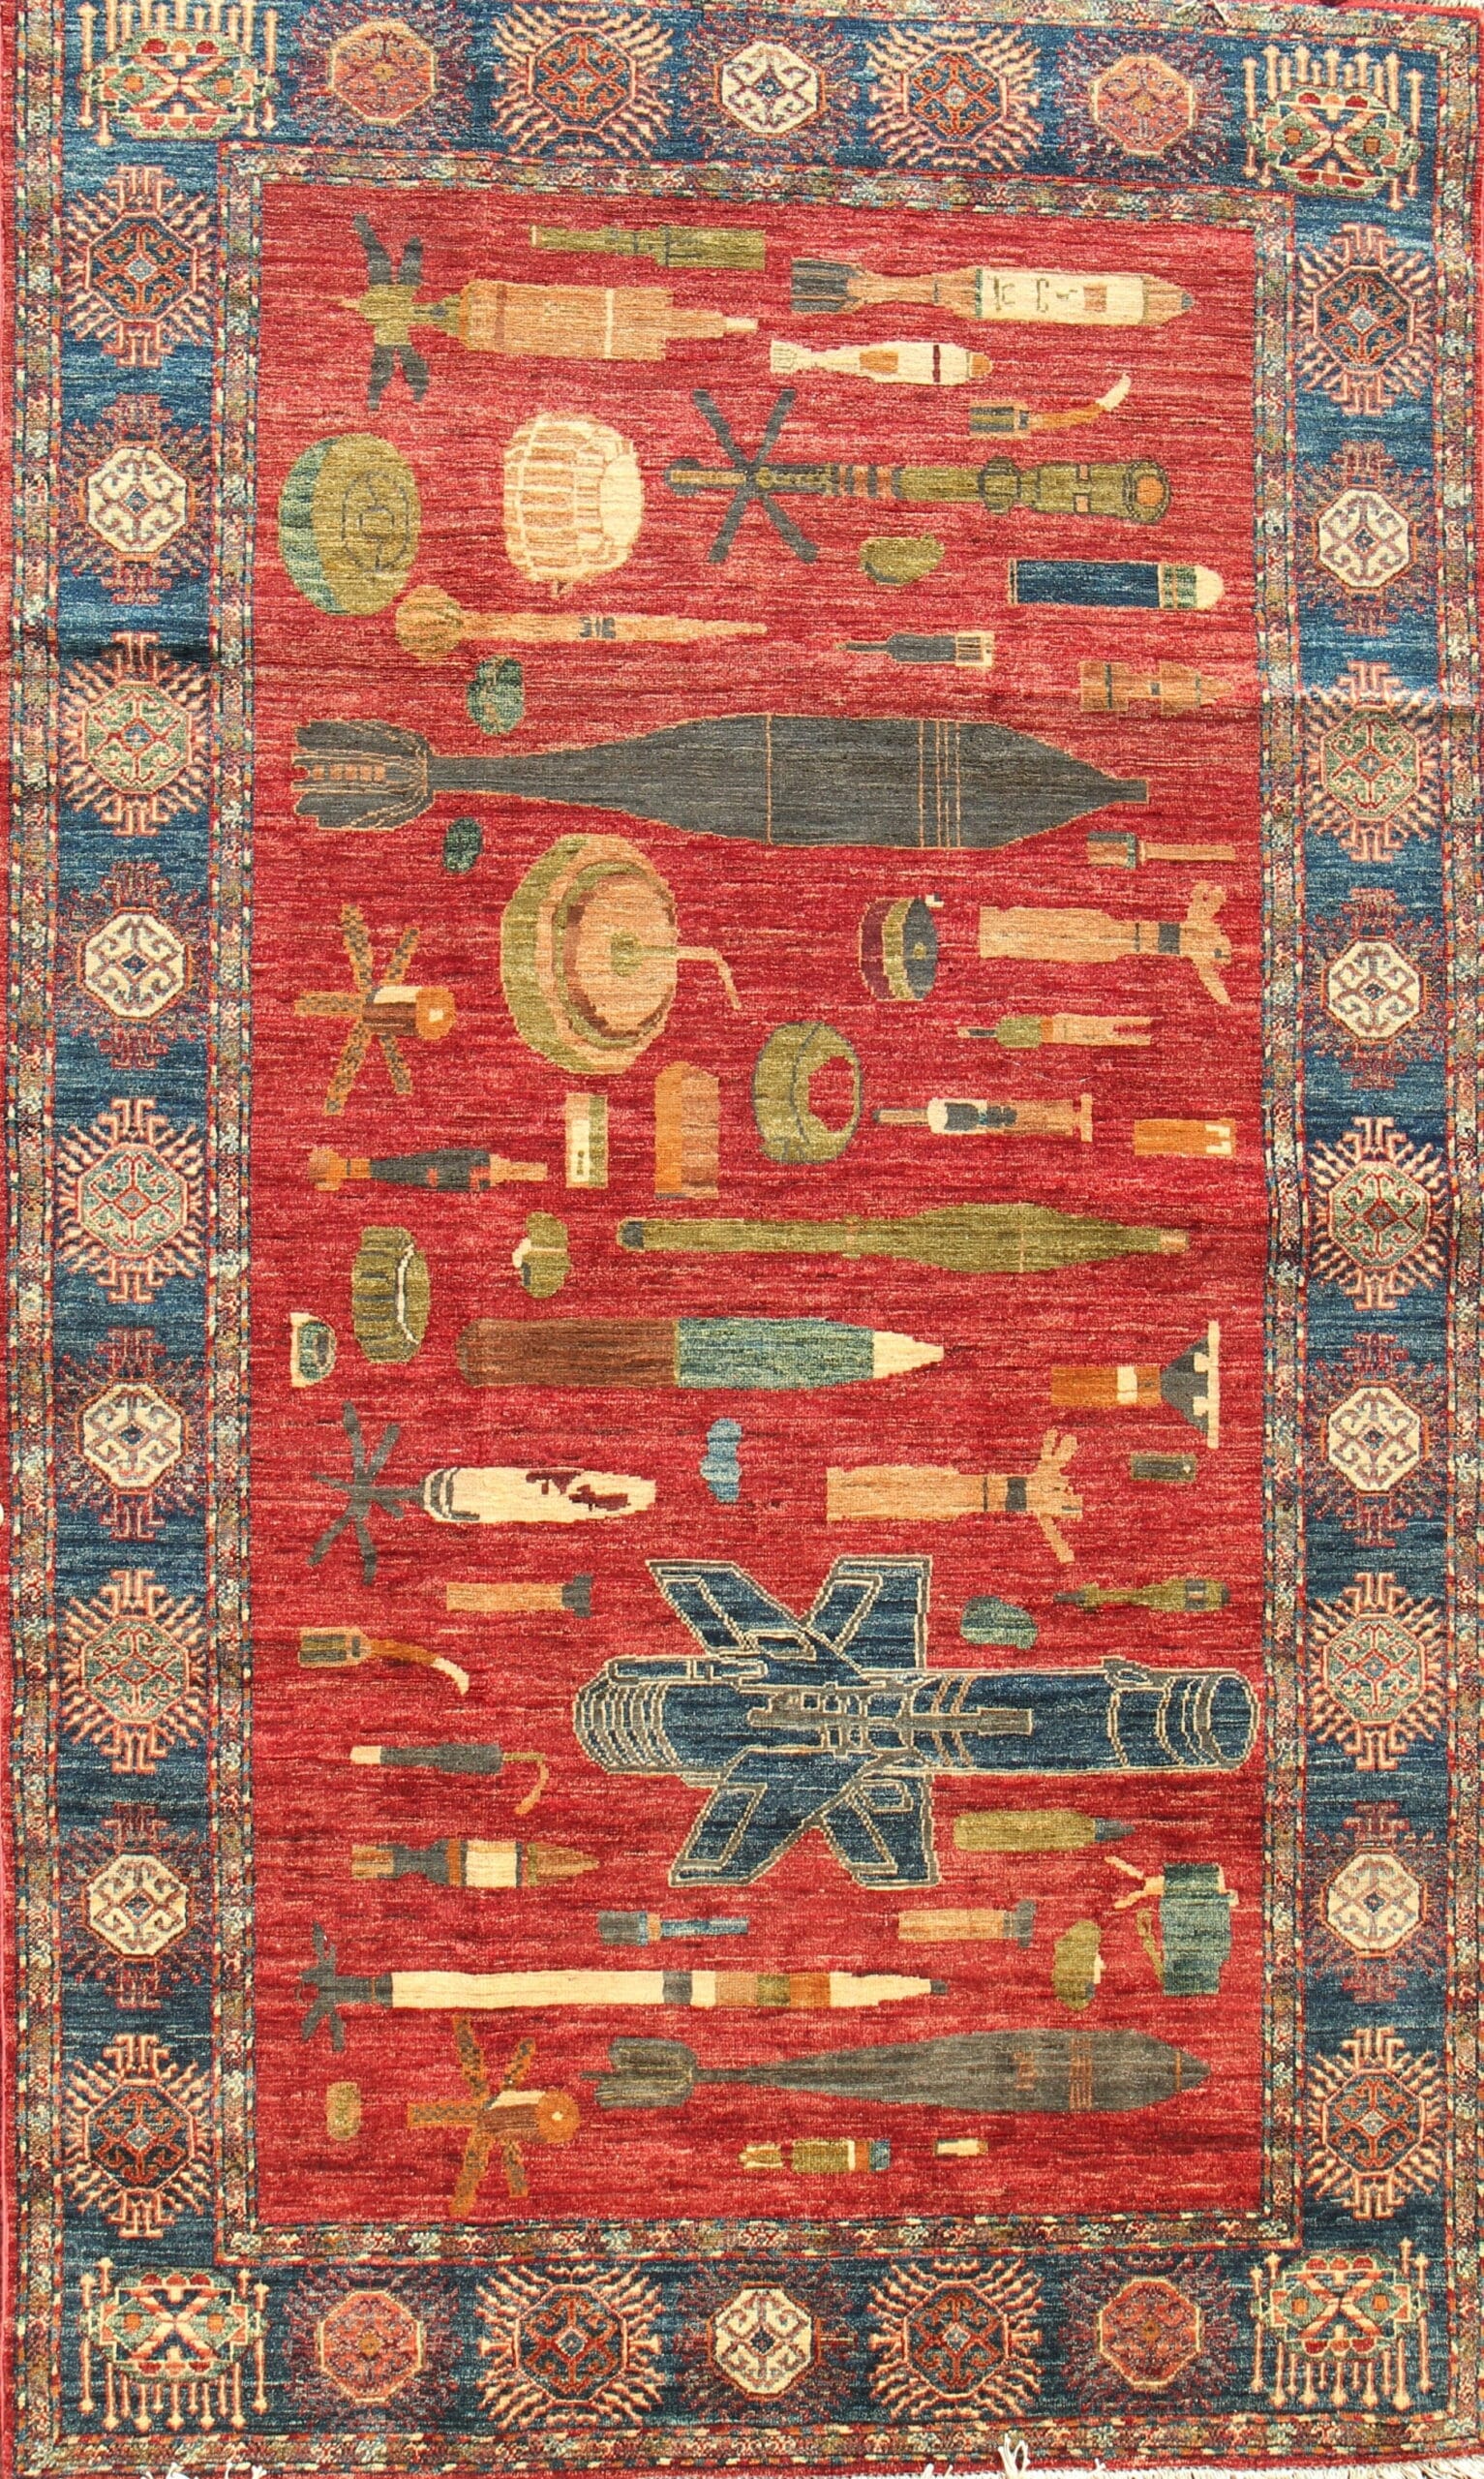 Afghan War Rugs and Khamak Embroidery